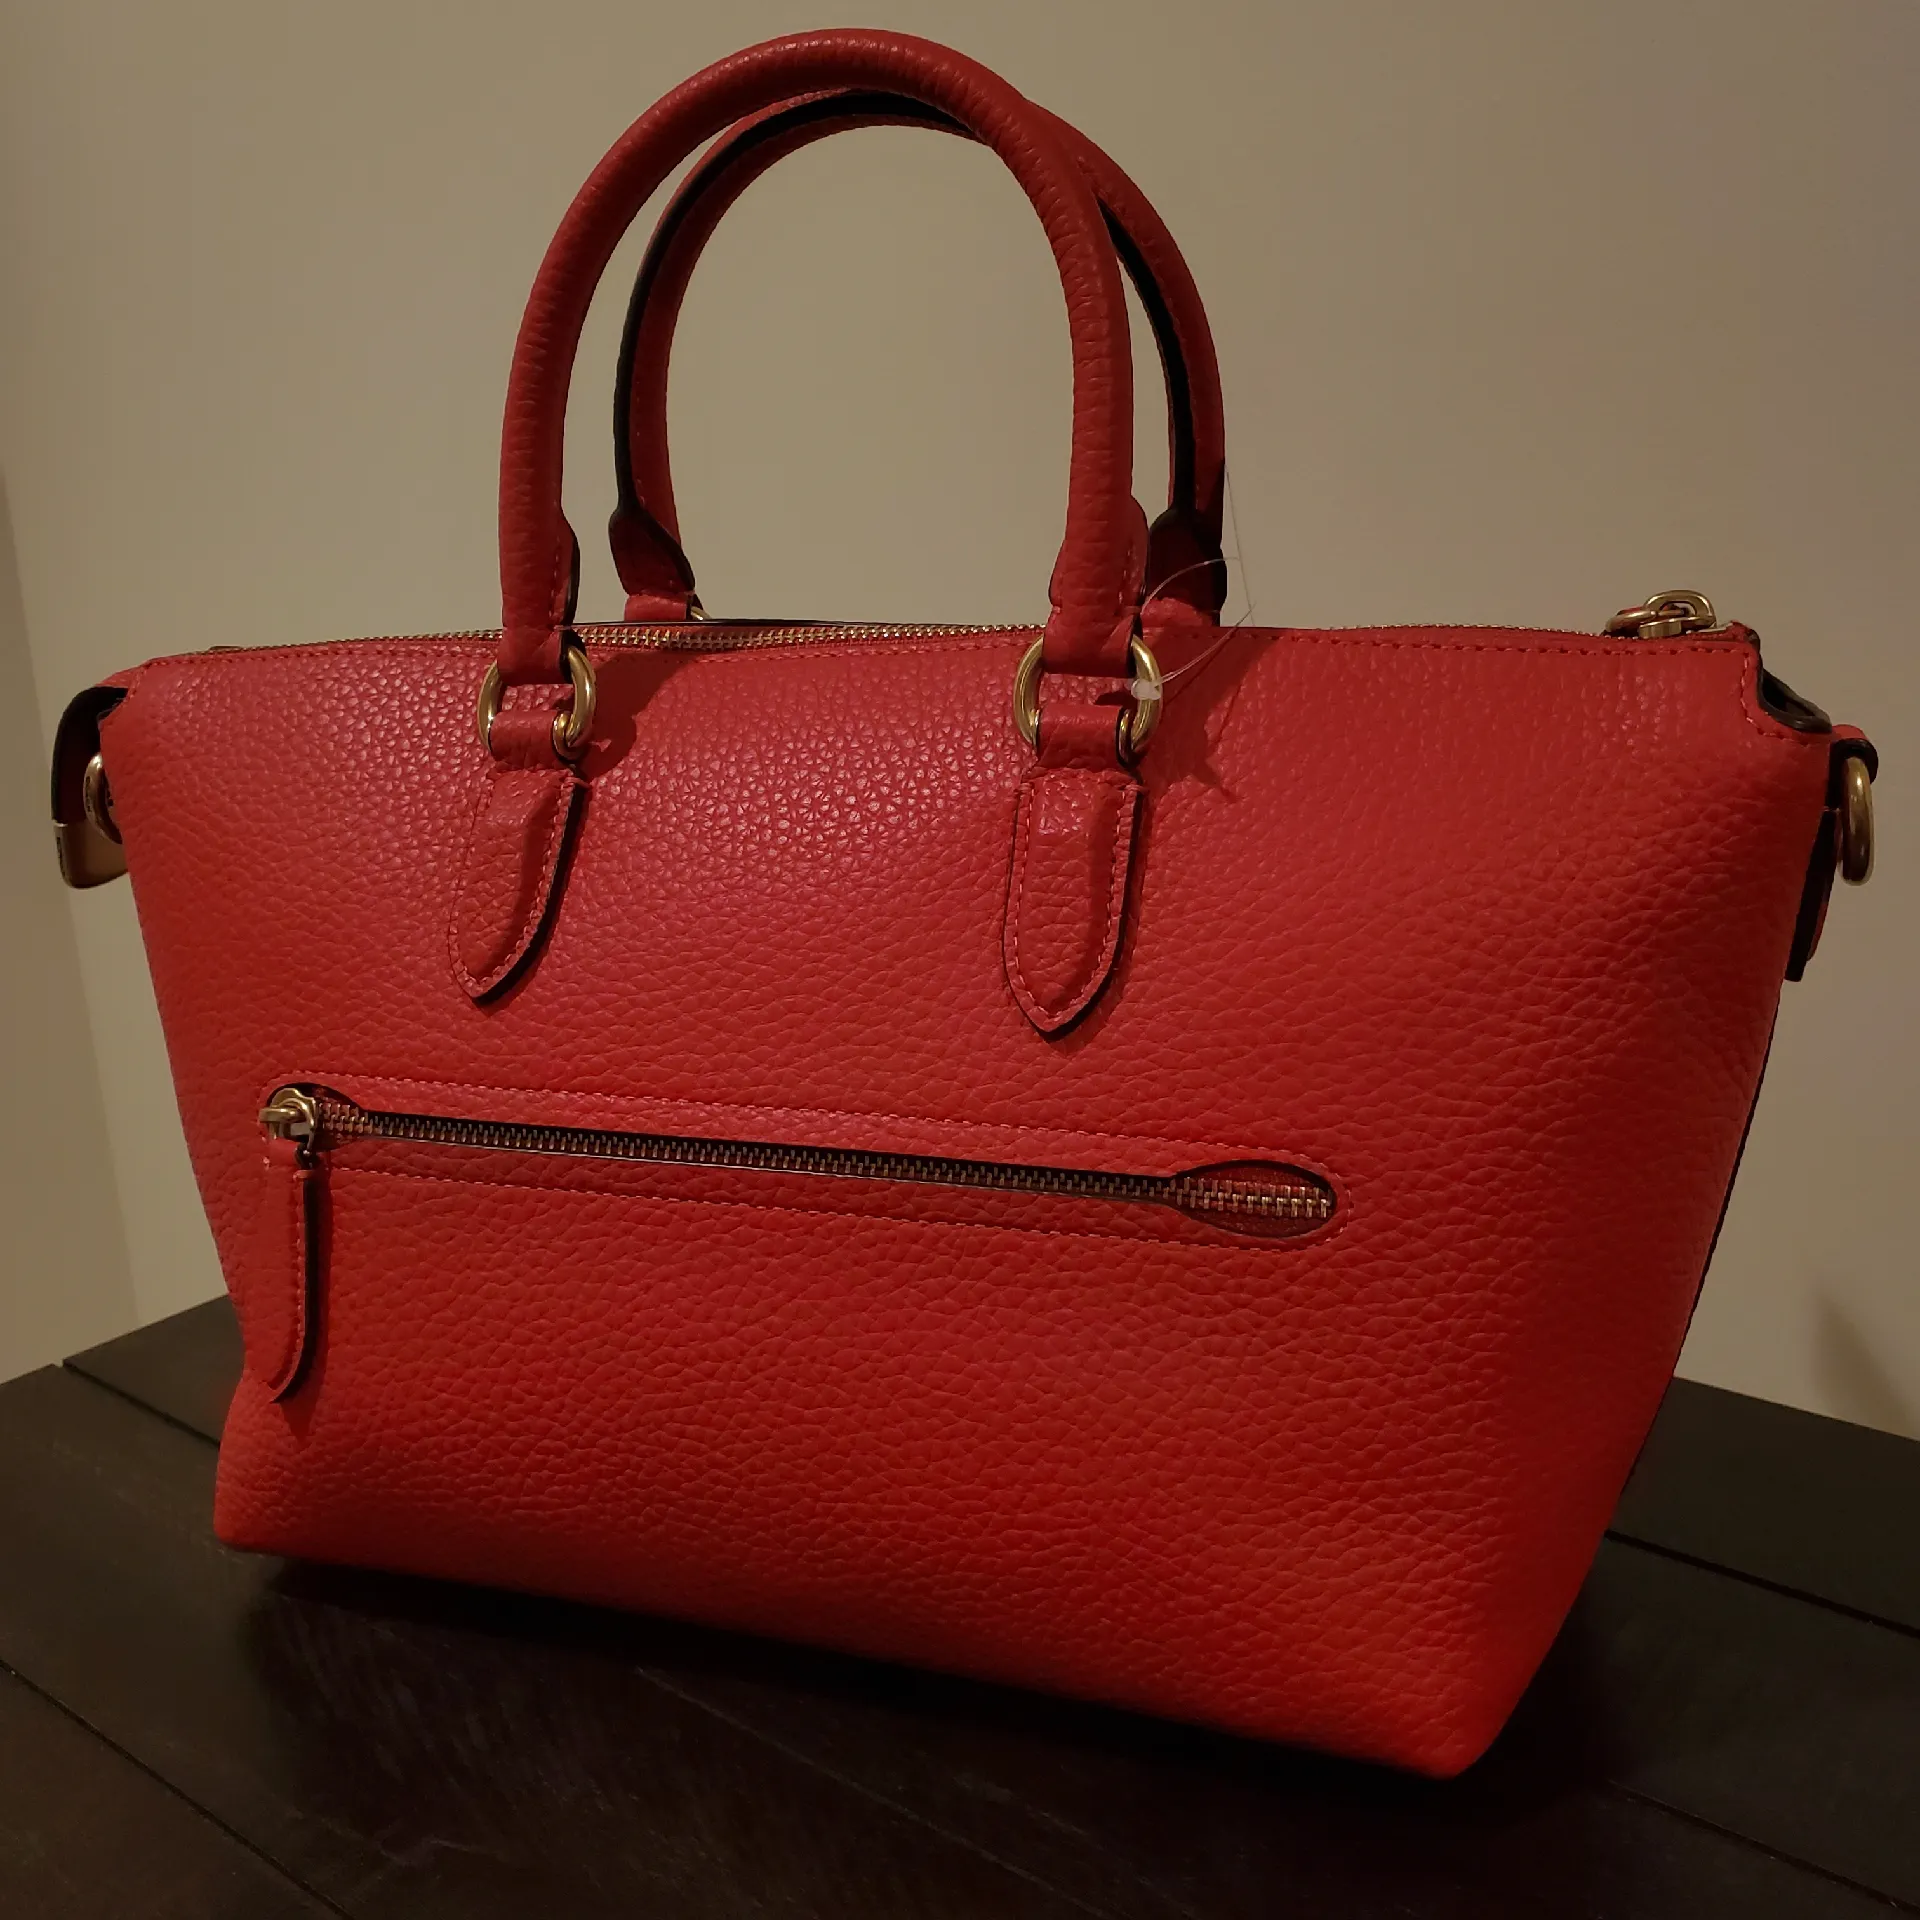 I wanna talk about Coach's recent glovetanned leather : r/handbags